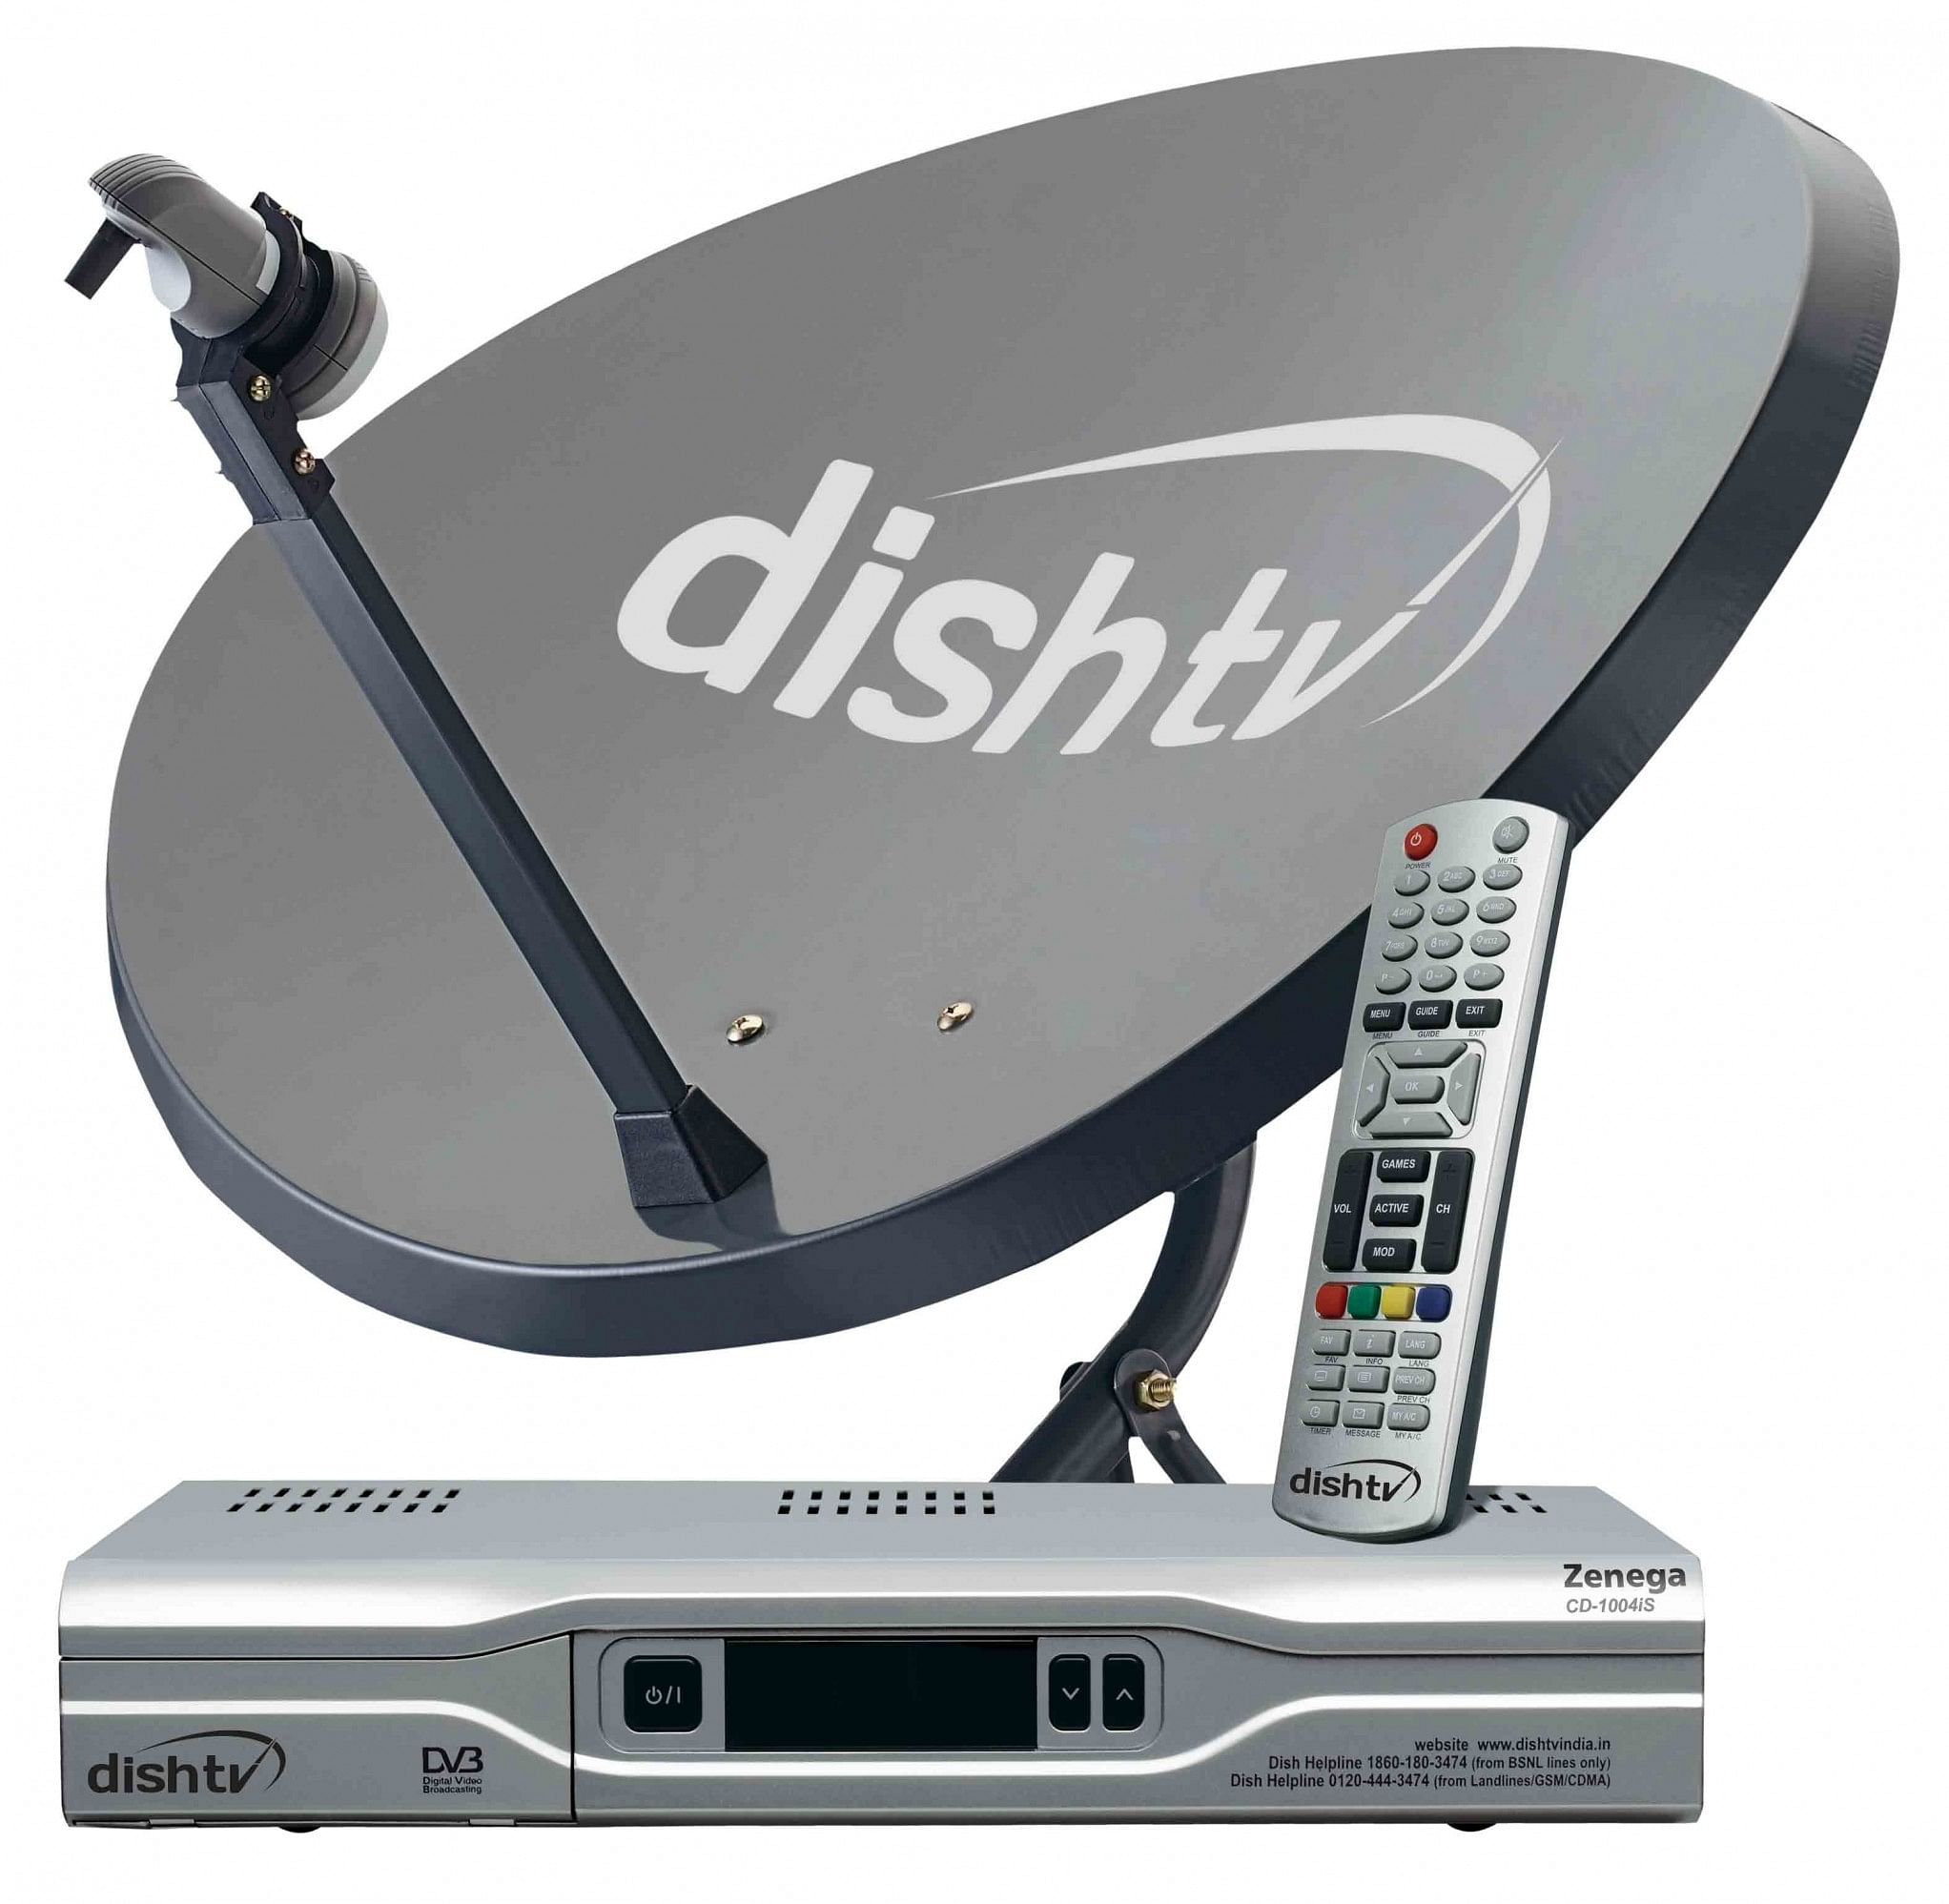 Dish tv remote software